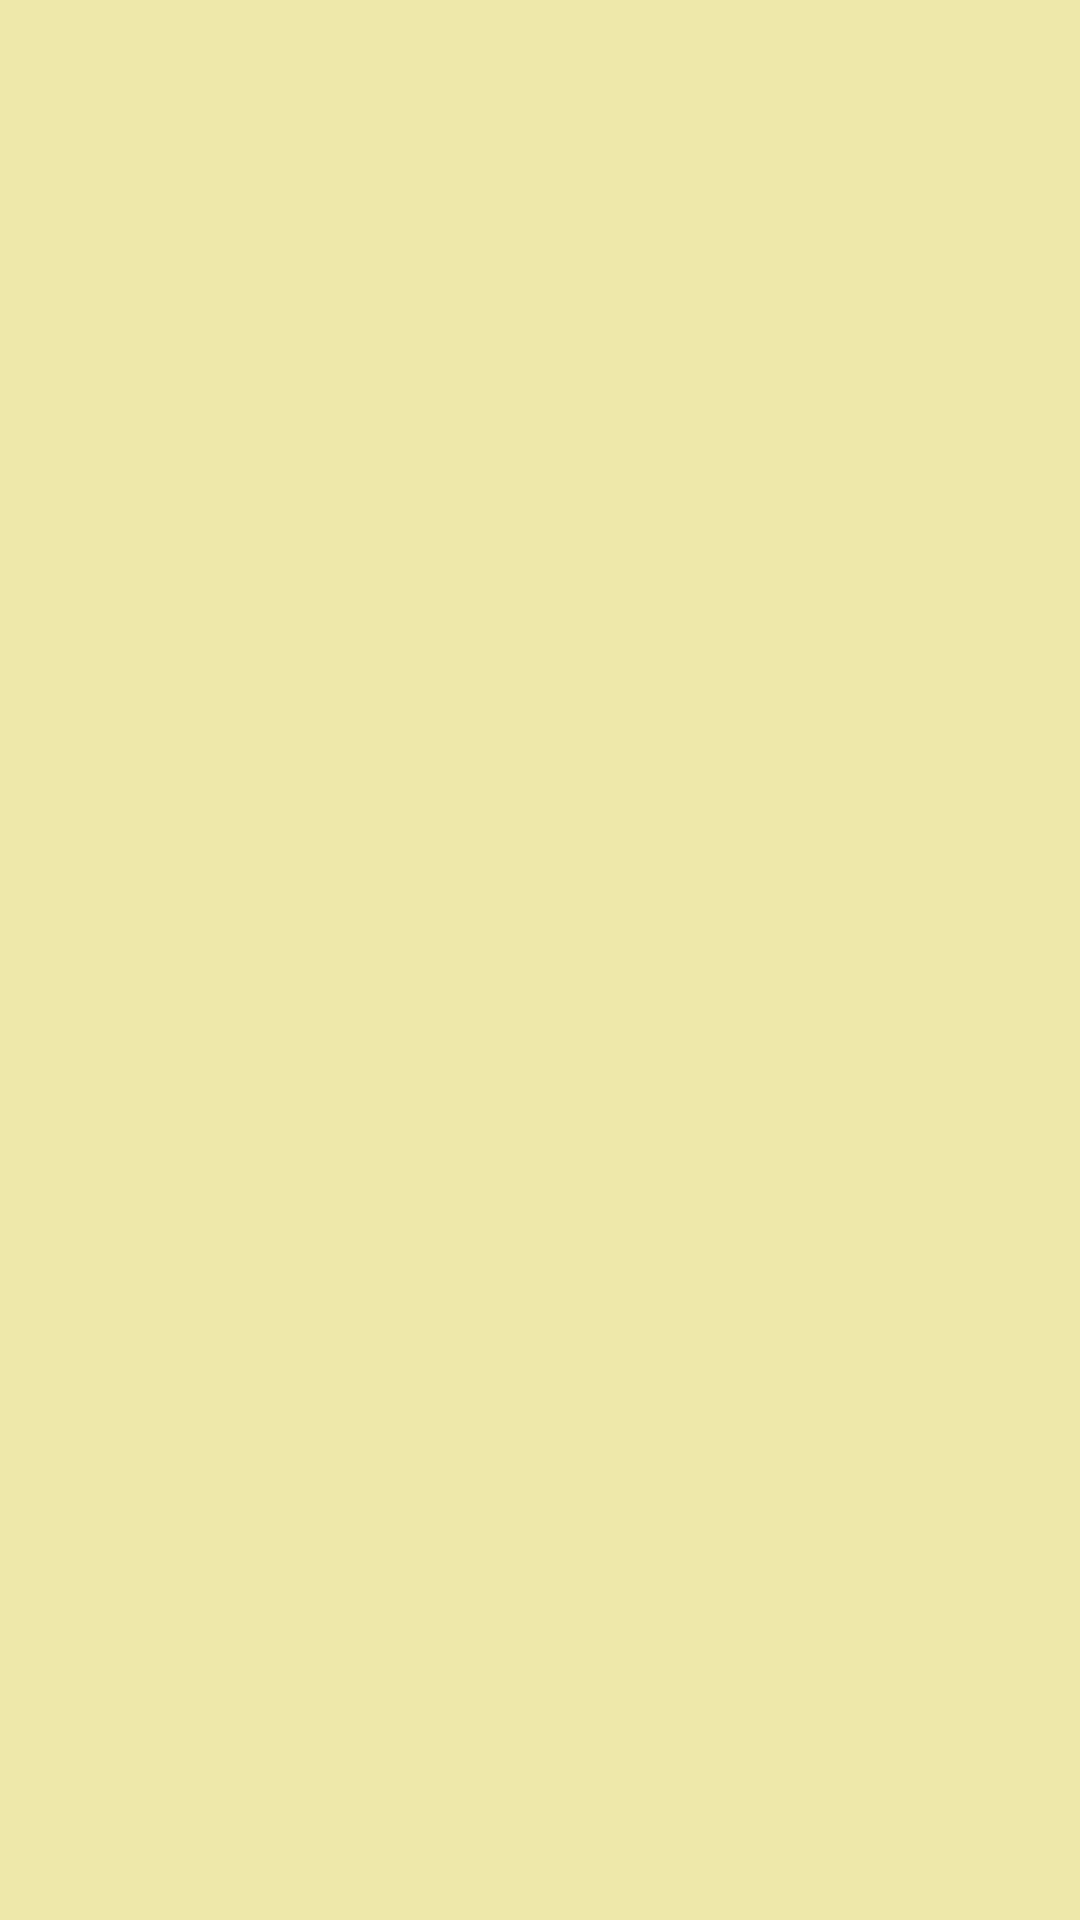 1080x1920 Pale Goldenrod Solid Color Background